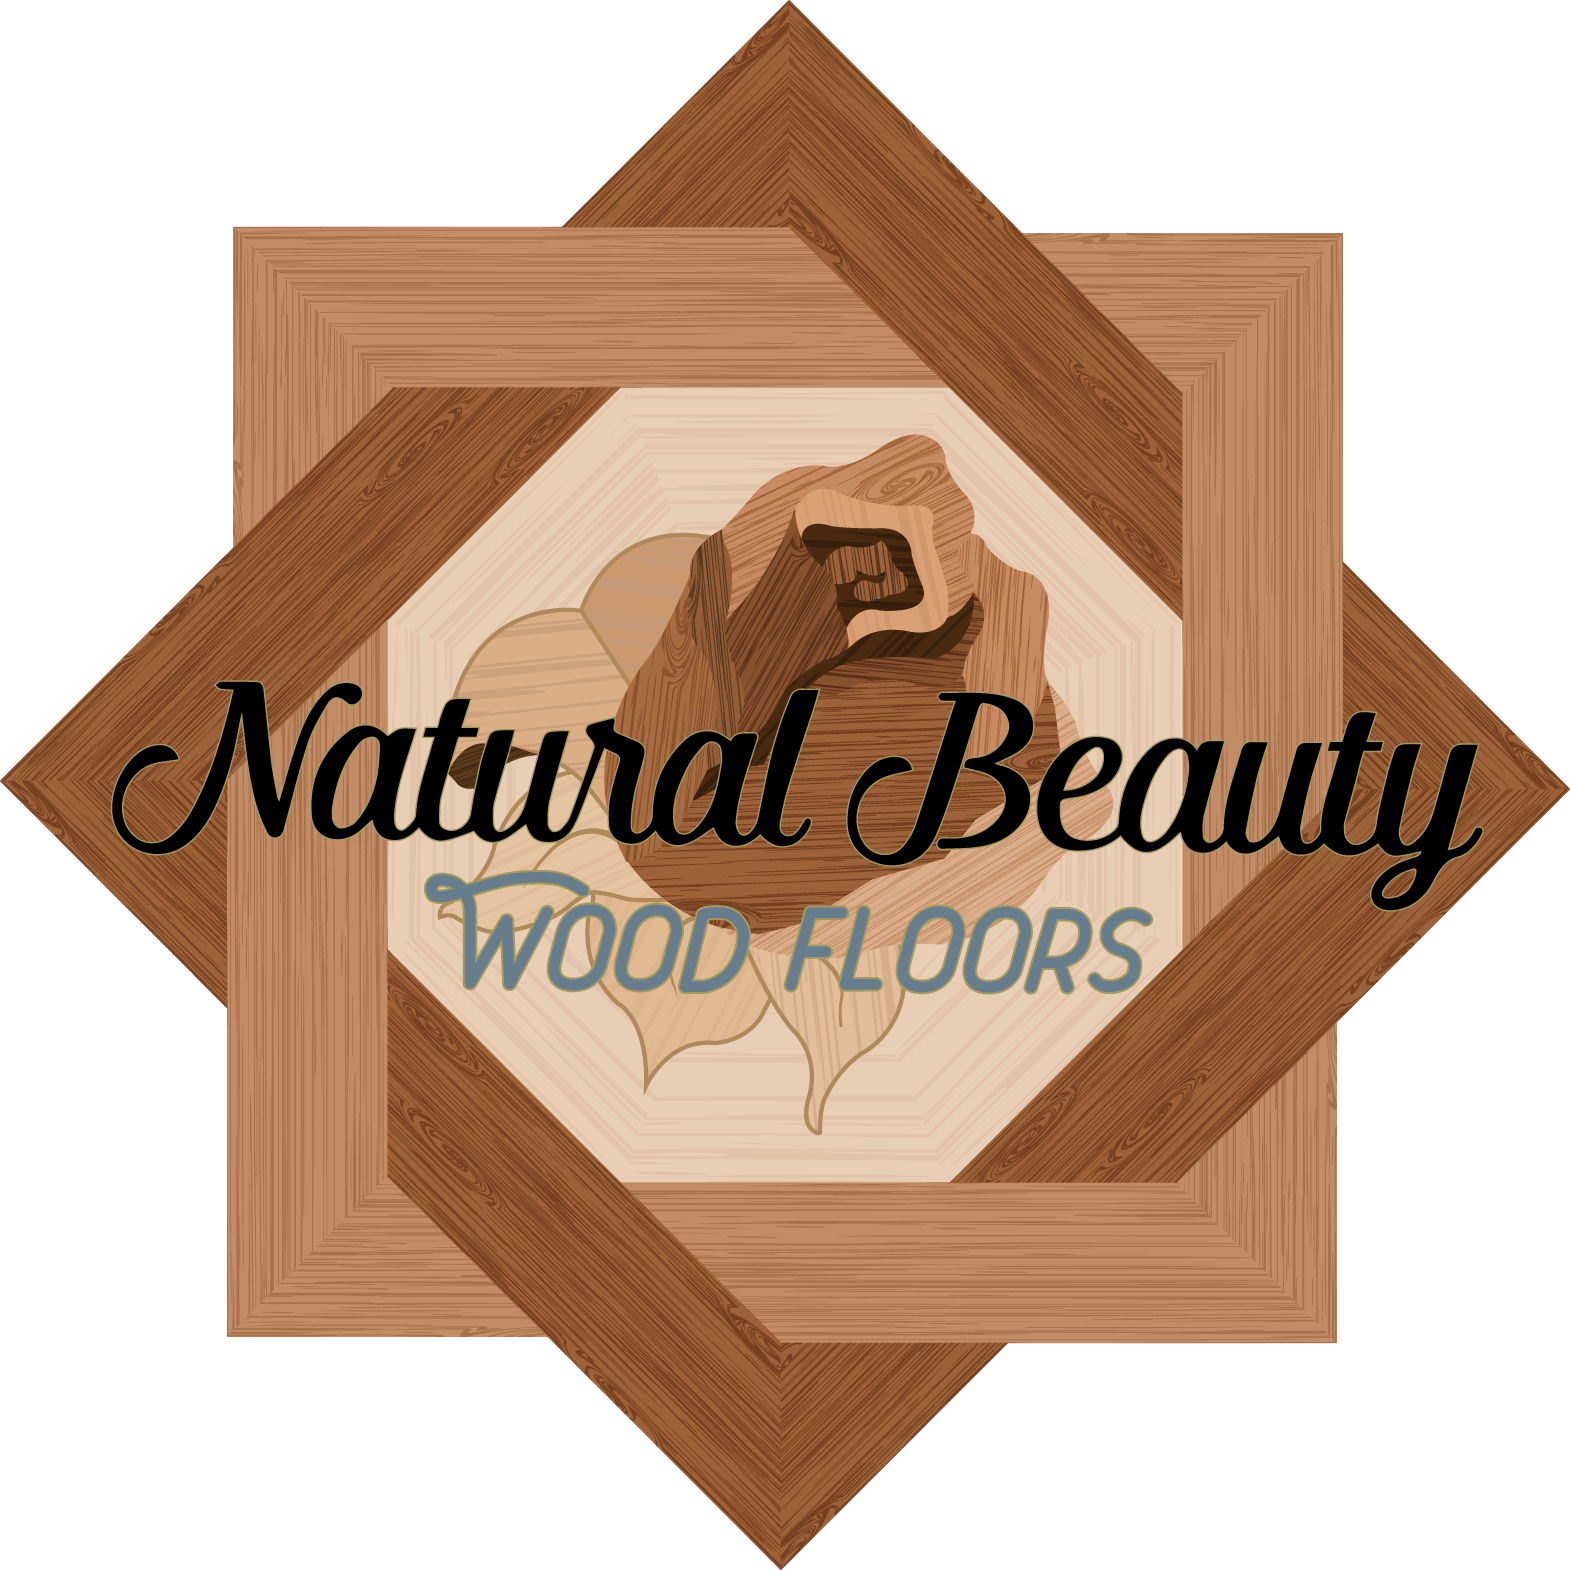 Detroit Hardwood Flooring Contractor, Company To Refinish Hardwood Floors